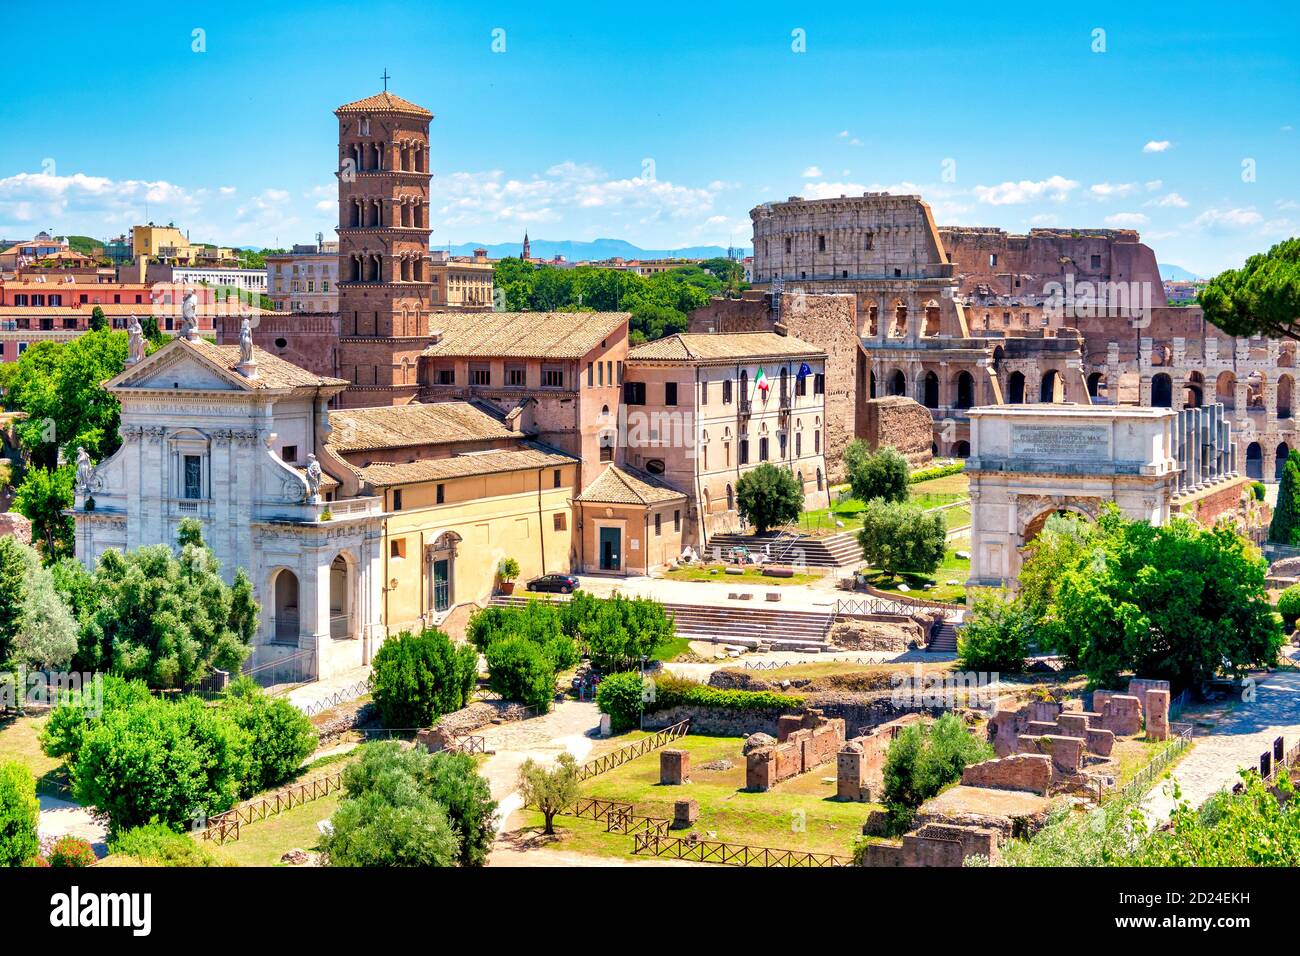 View of the Roman forum, Rome, Italy Stock Photo